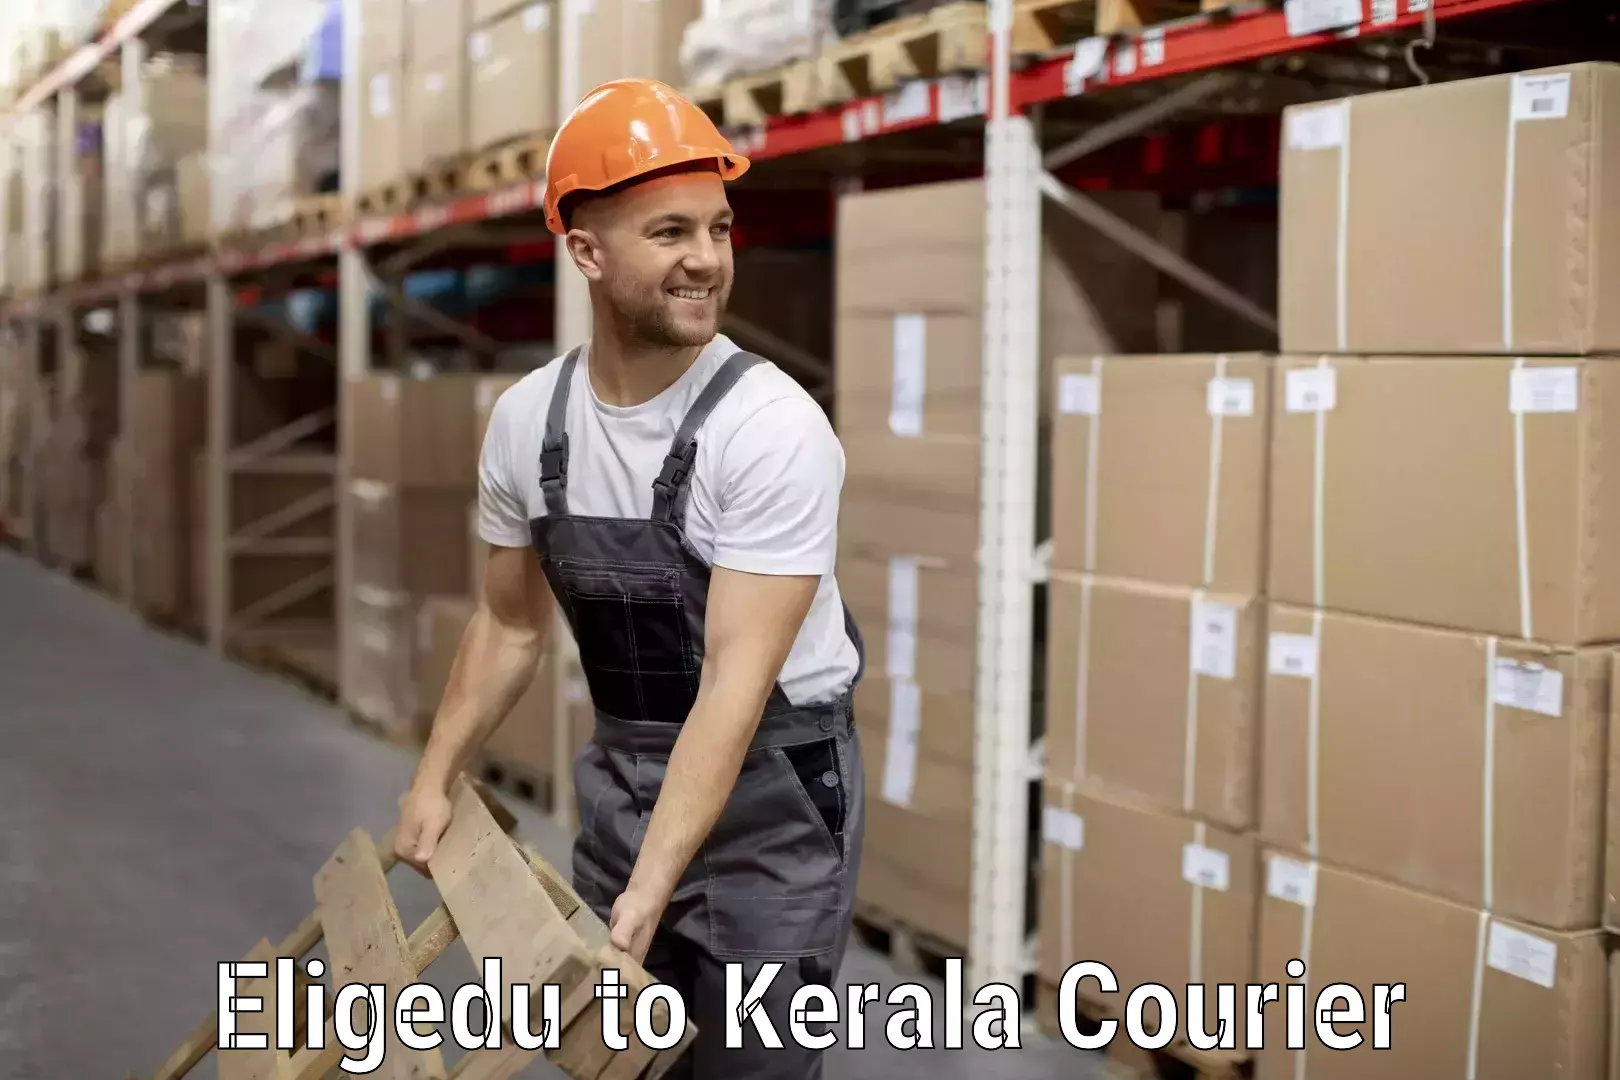 Luggage shipment specialists Eligedu to Kerala